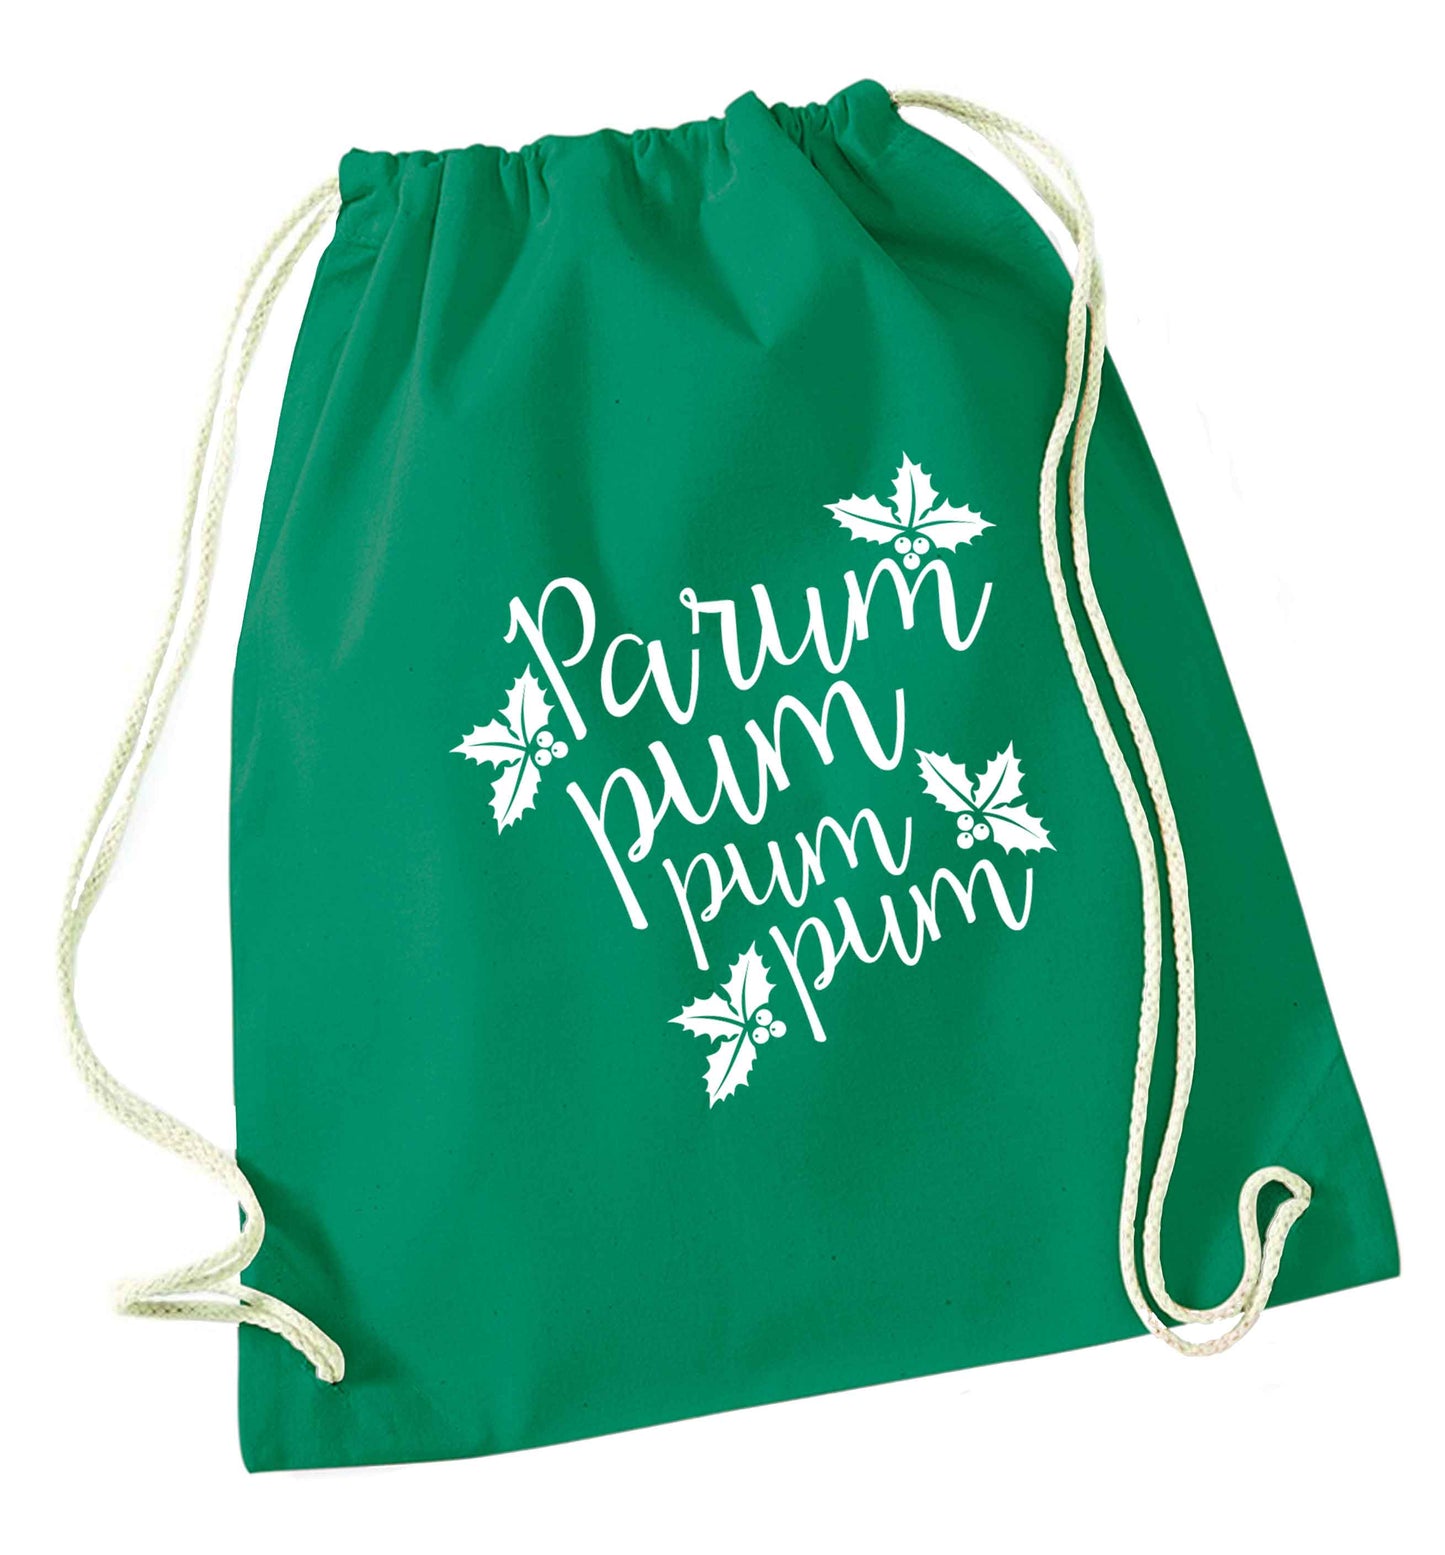 Pa rum pum pum pum green drawstring bag